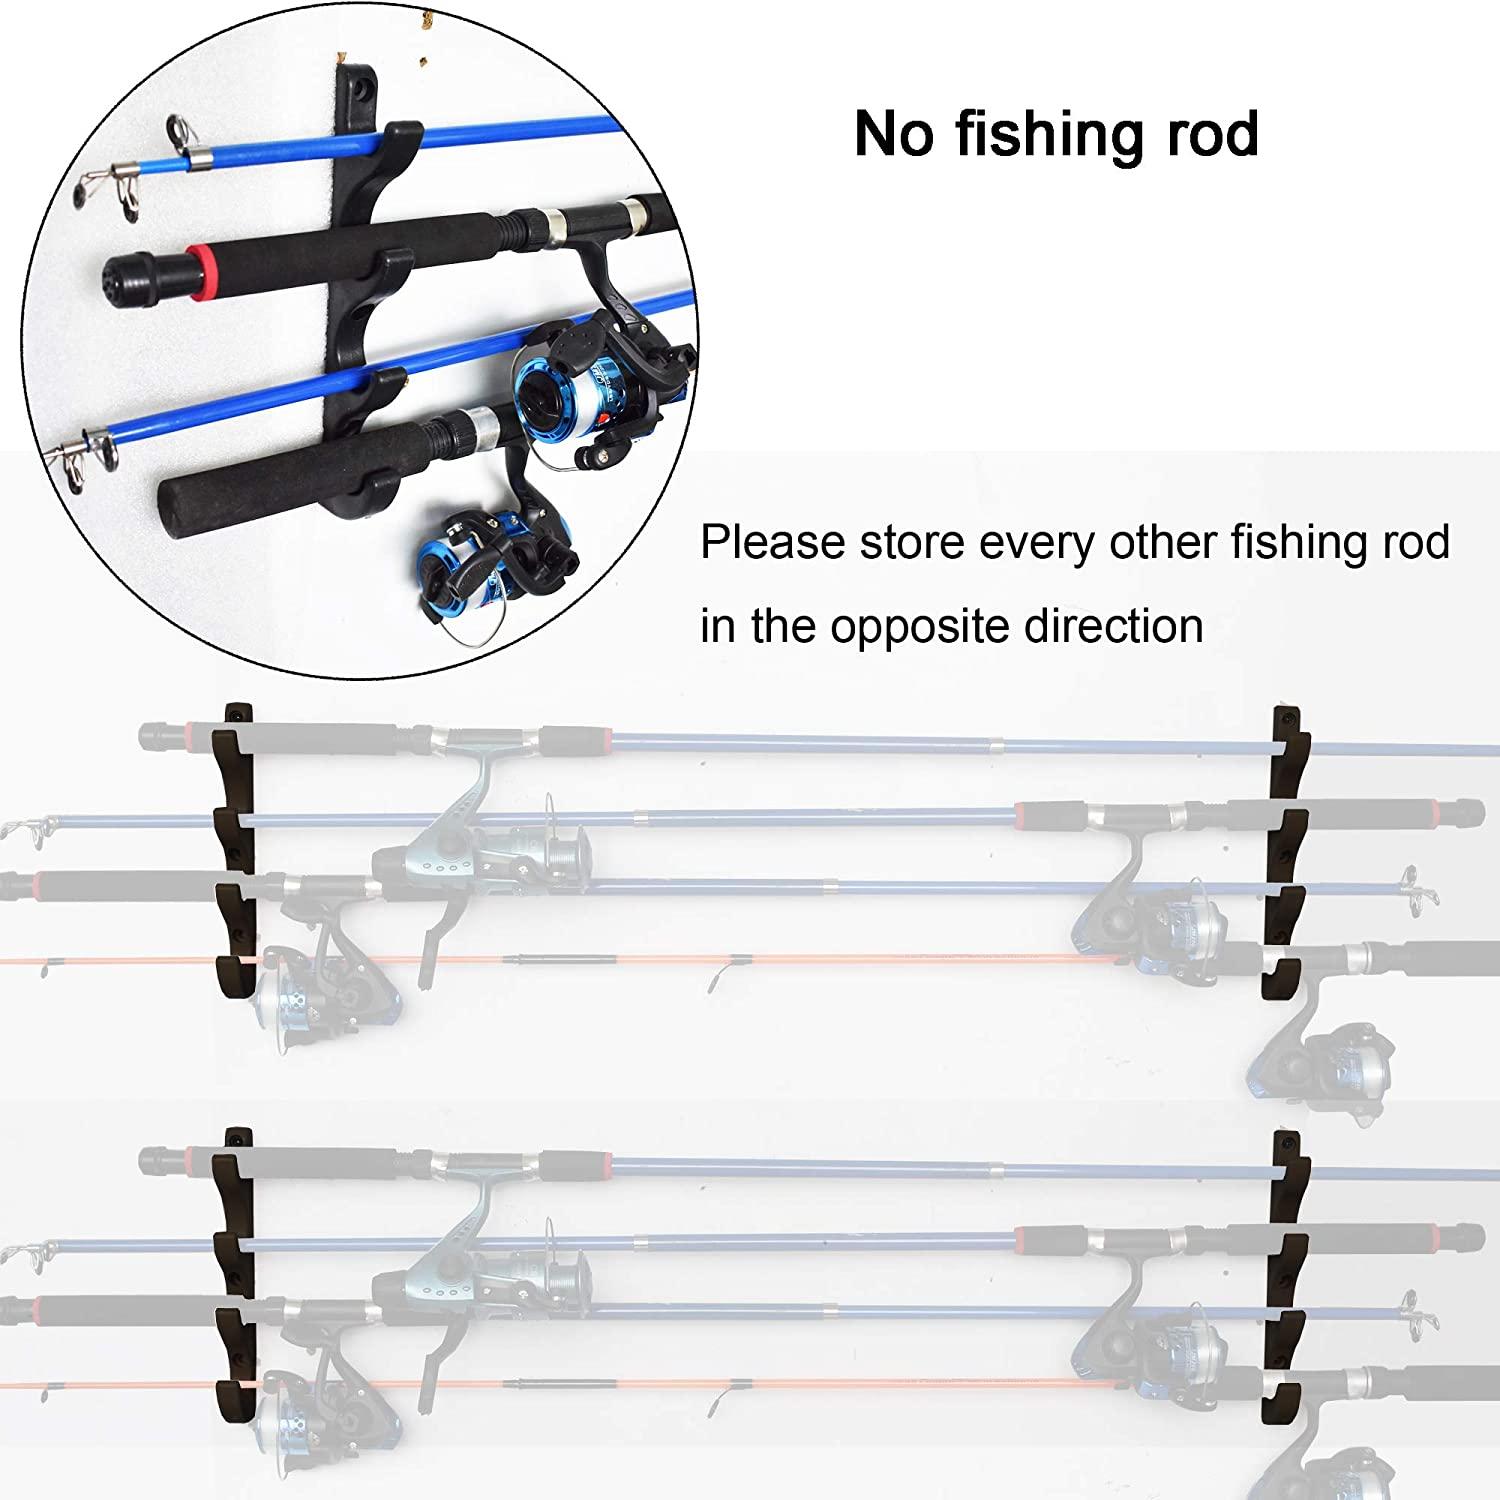 YYST Horizontal Fishing Rod Storage Rack Holder Wall Mount W Screws - No  Fishing Rod- to Hold 8 Fishing Rods, Rod Racks -  Canada